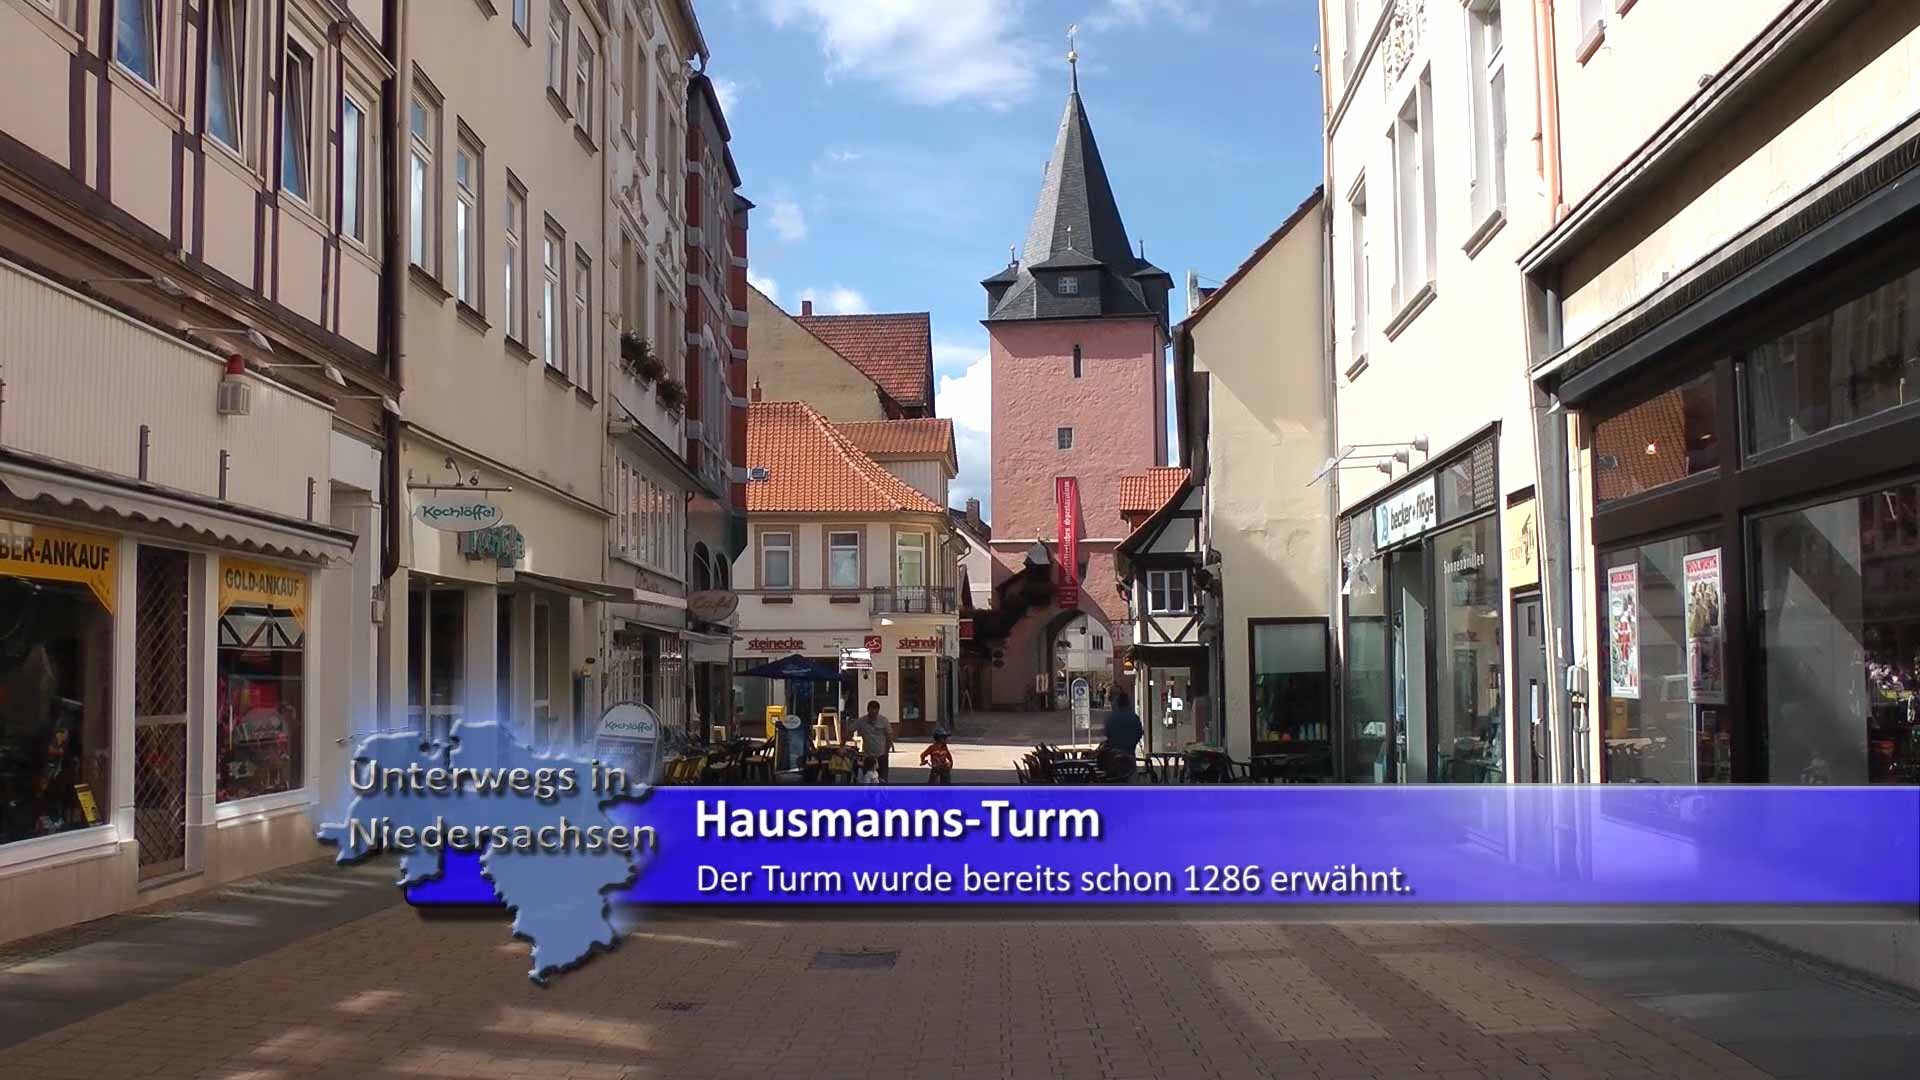 Hausmanns-Turm